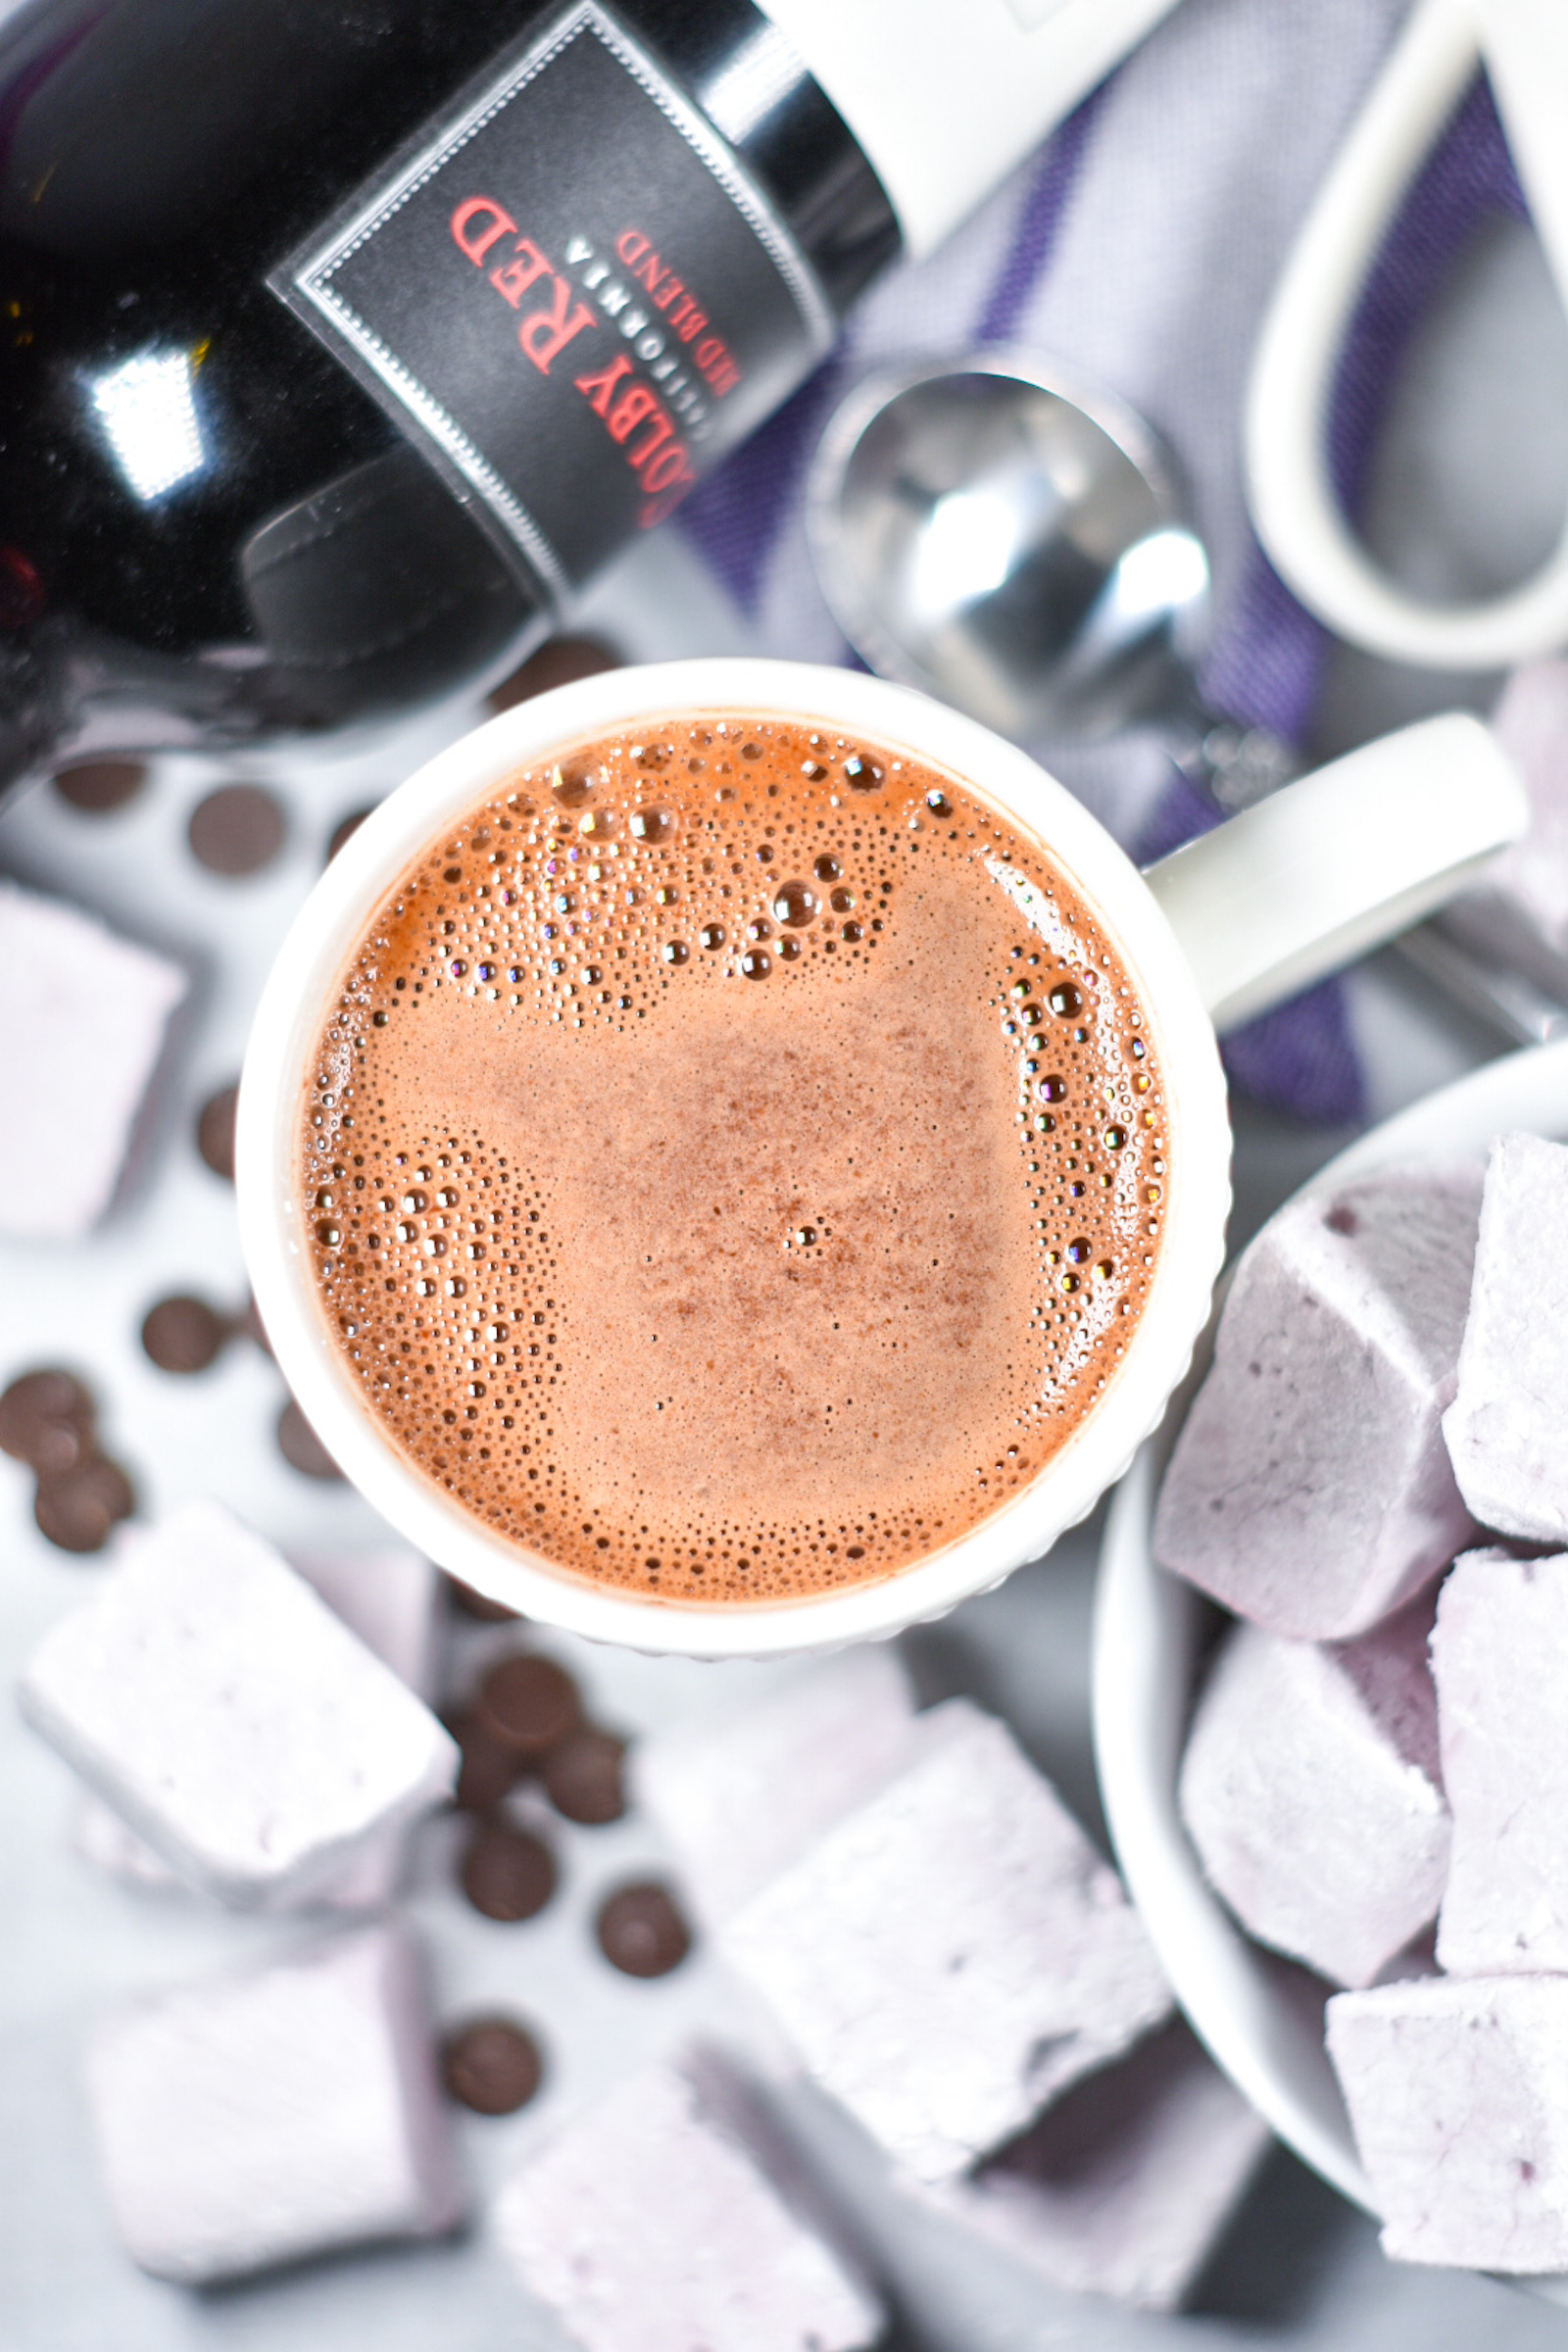 a mug of hot chocolate, marshmallows, and a purple tea towel